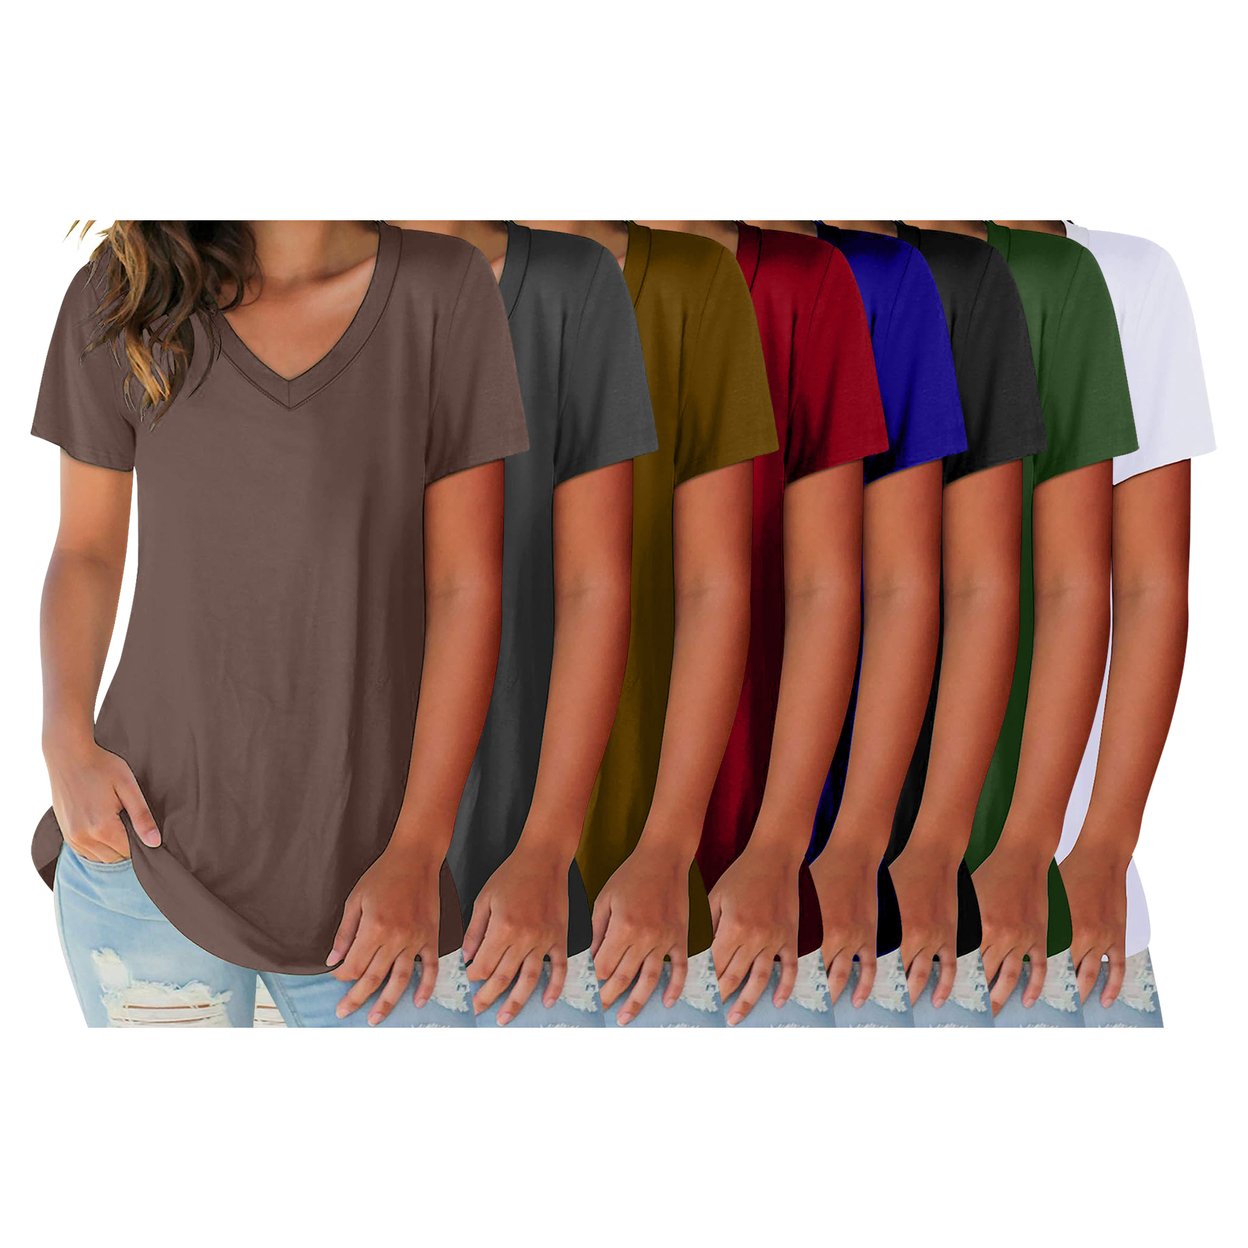 2-Pack: Women's Ultra Soft Smooth Cotton Blend Basic V-Neck Short Sleeve Shirts - Grey & Mustard, Medium